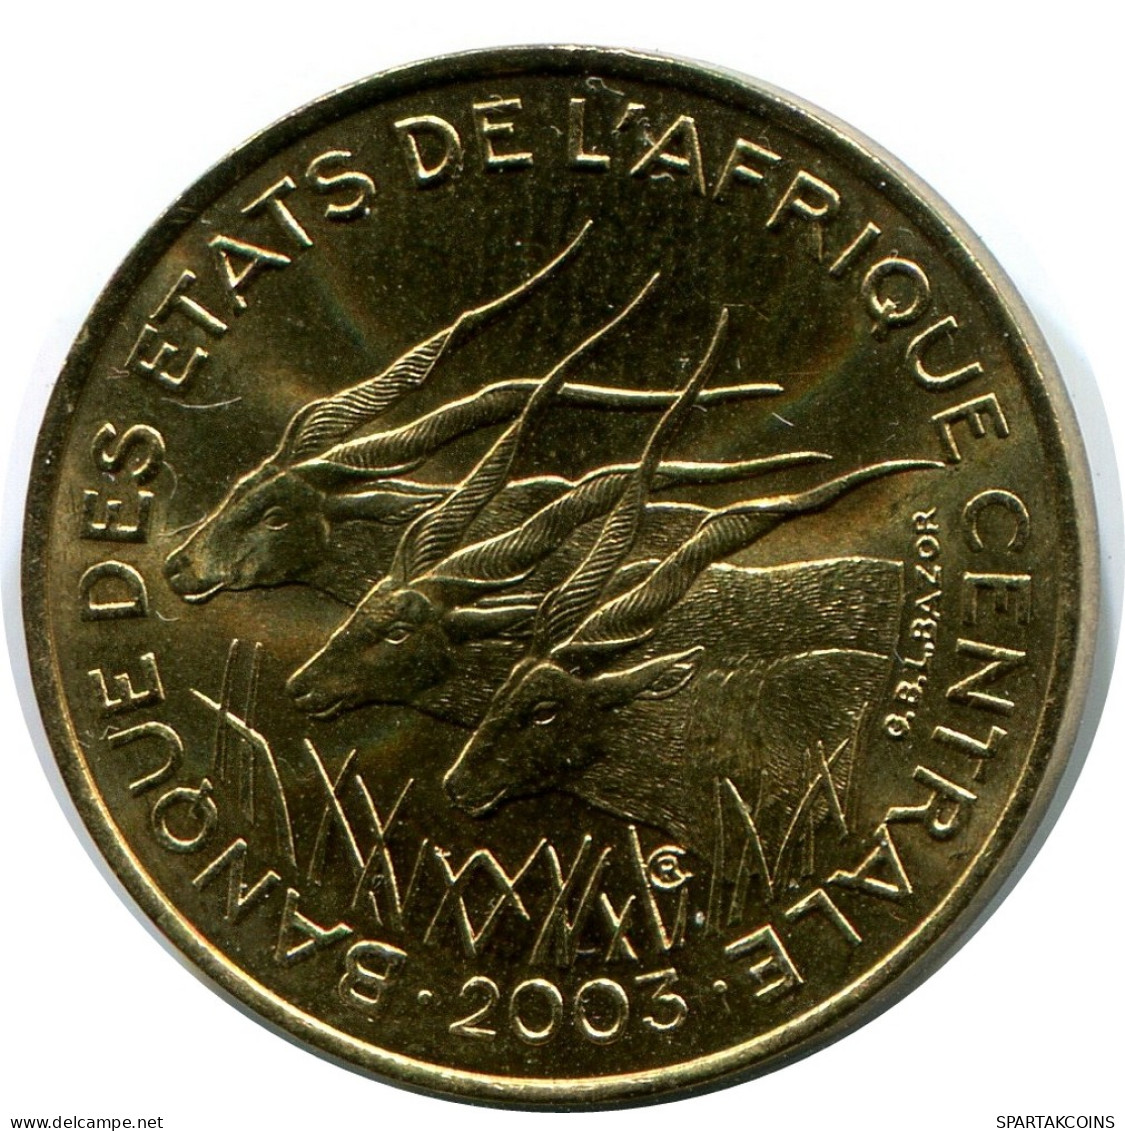 5 FRANCS CFA 2003 CENTRAL AFRICAN STATES (BEAC) Coin #AP859.U - Repubblica Centroafricana